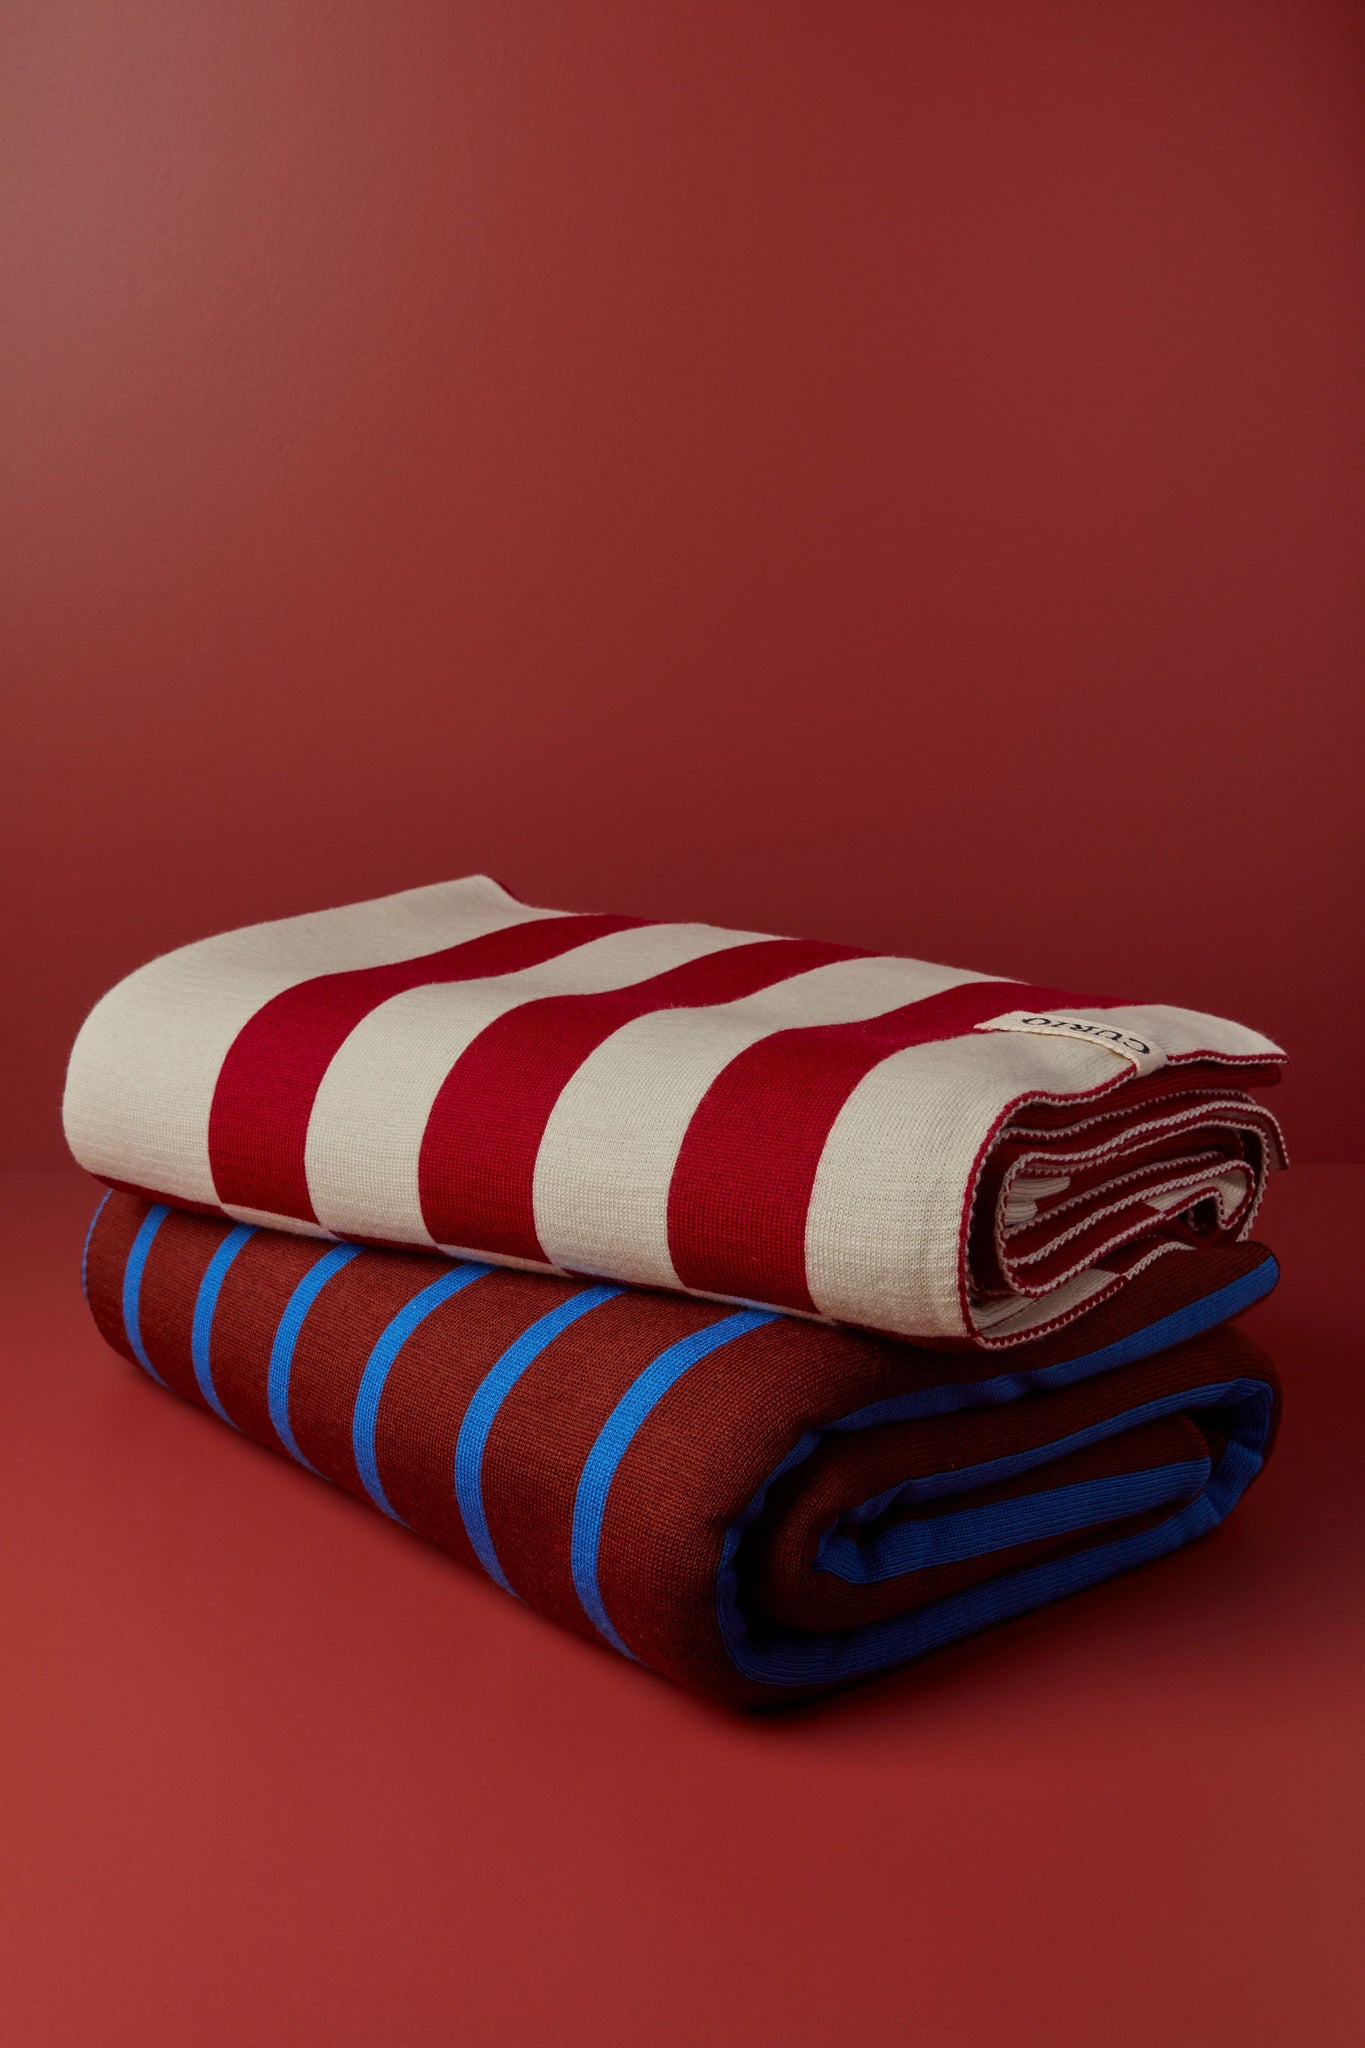 Curio - Merino Wool King Blanket, Royal Spice